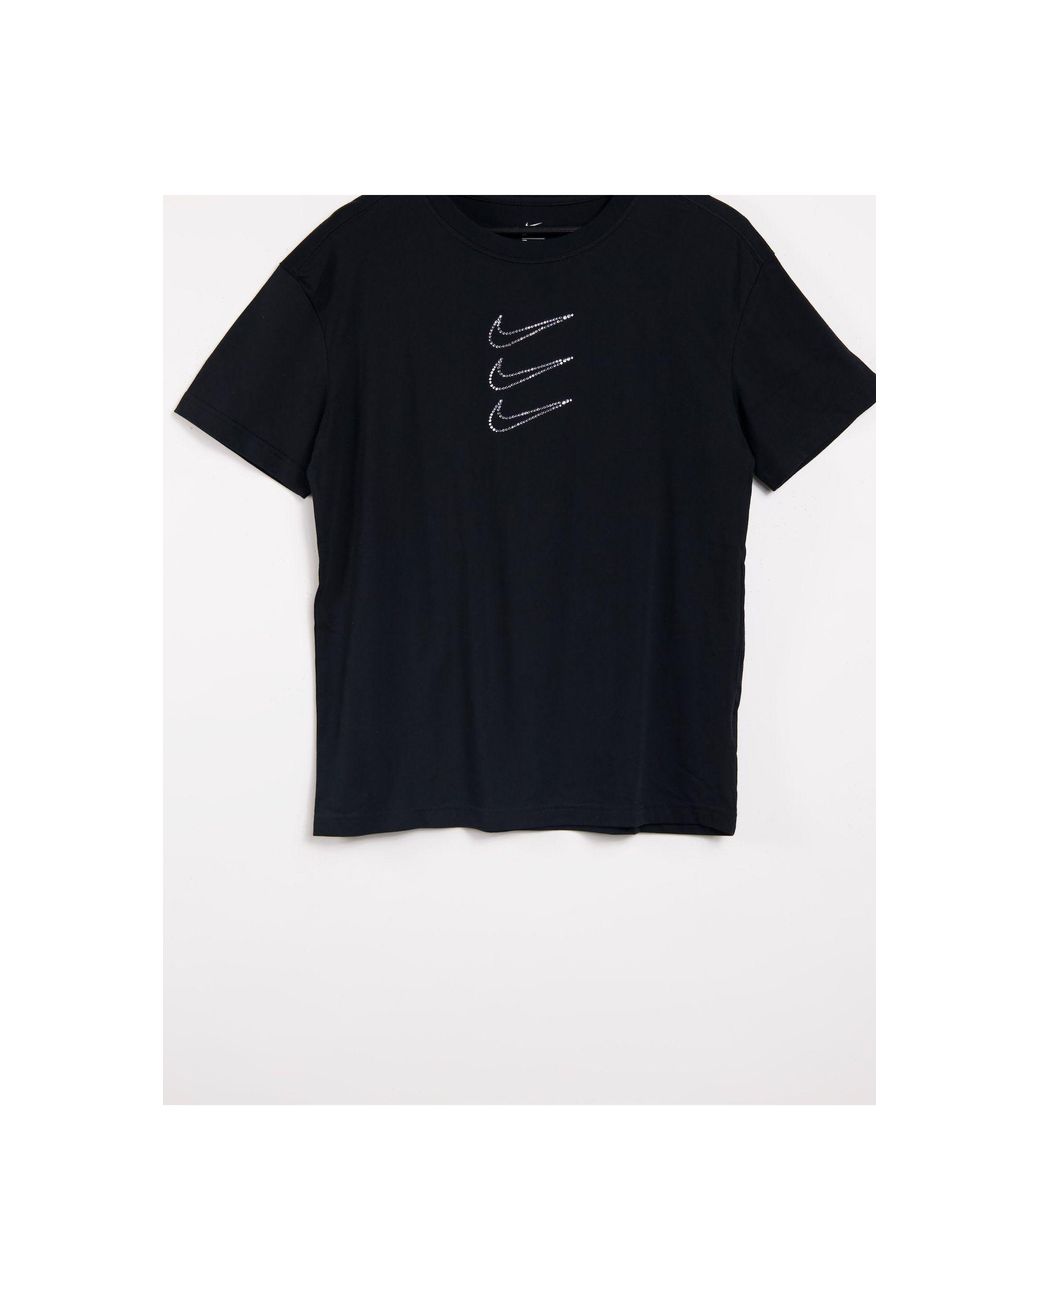 Nike Cotton Rhinestone Triple Swoosh T-shirt in Black | Lyst Australia